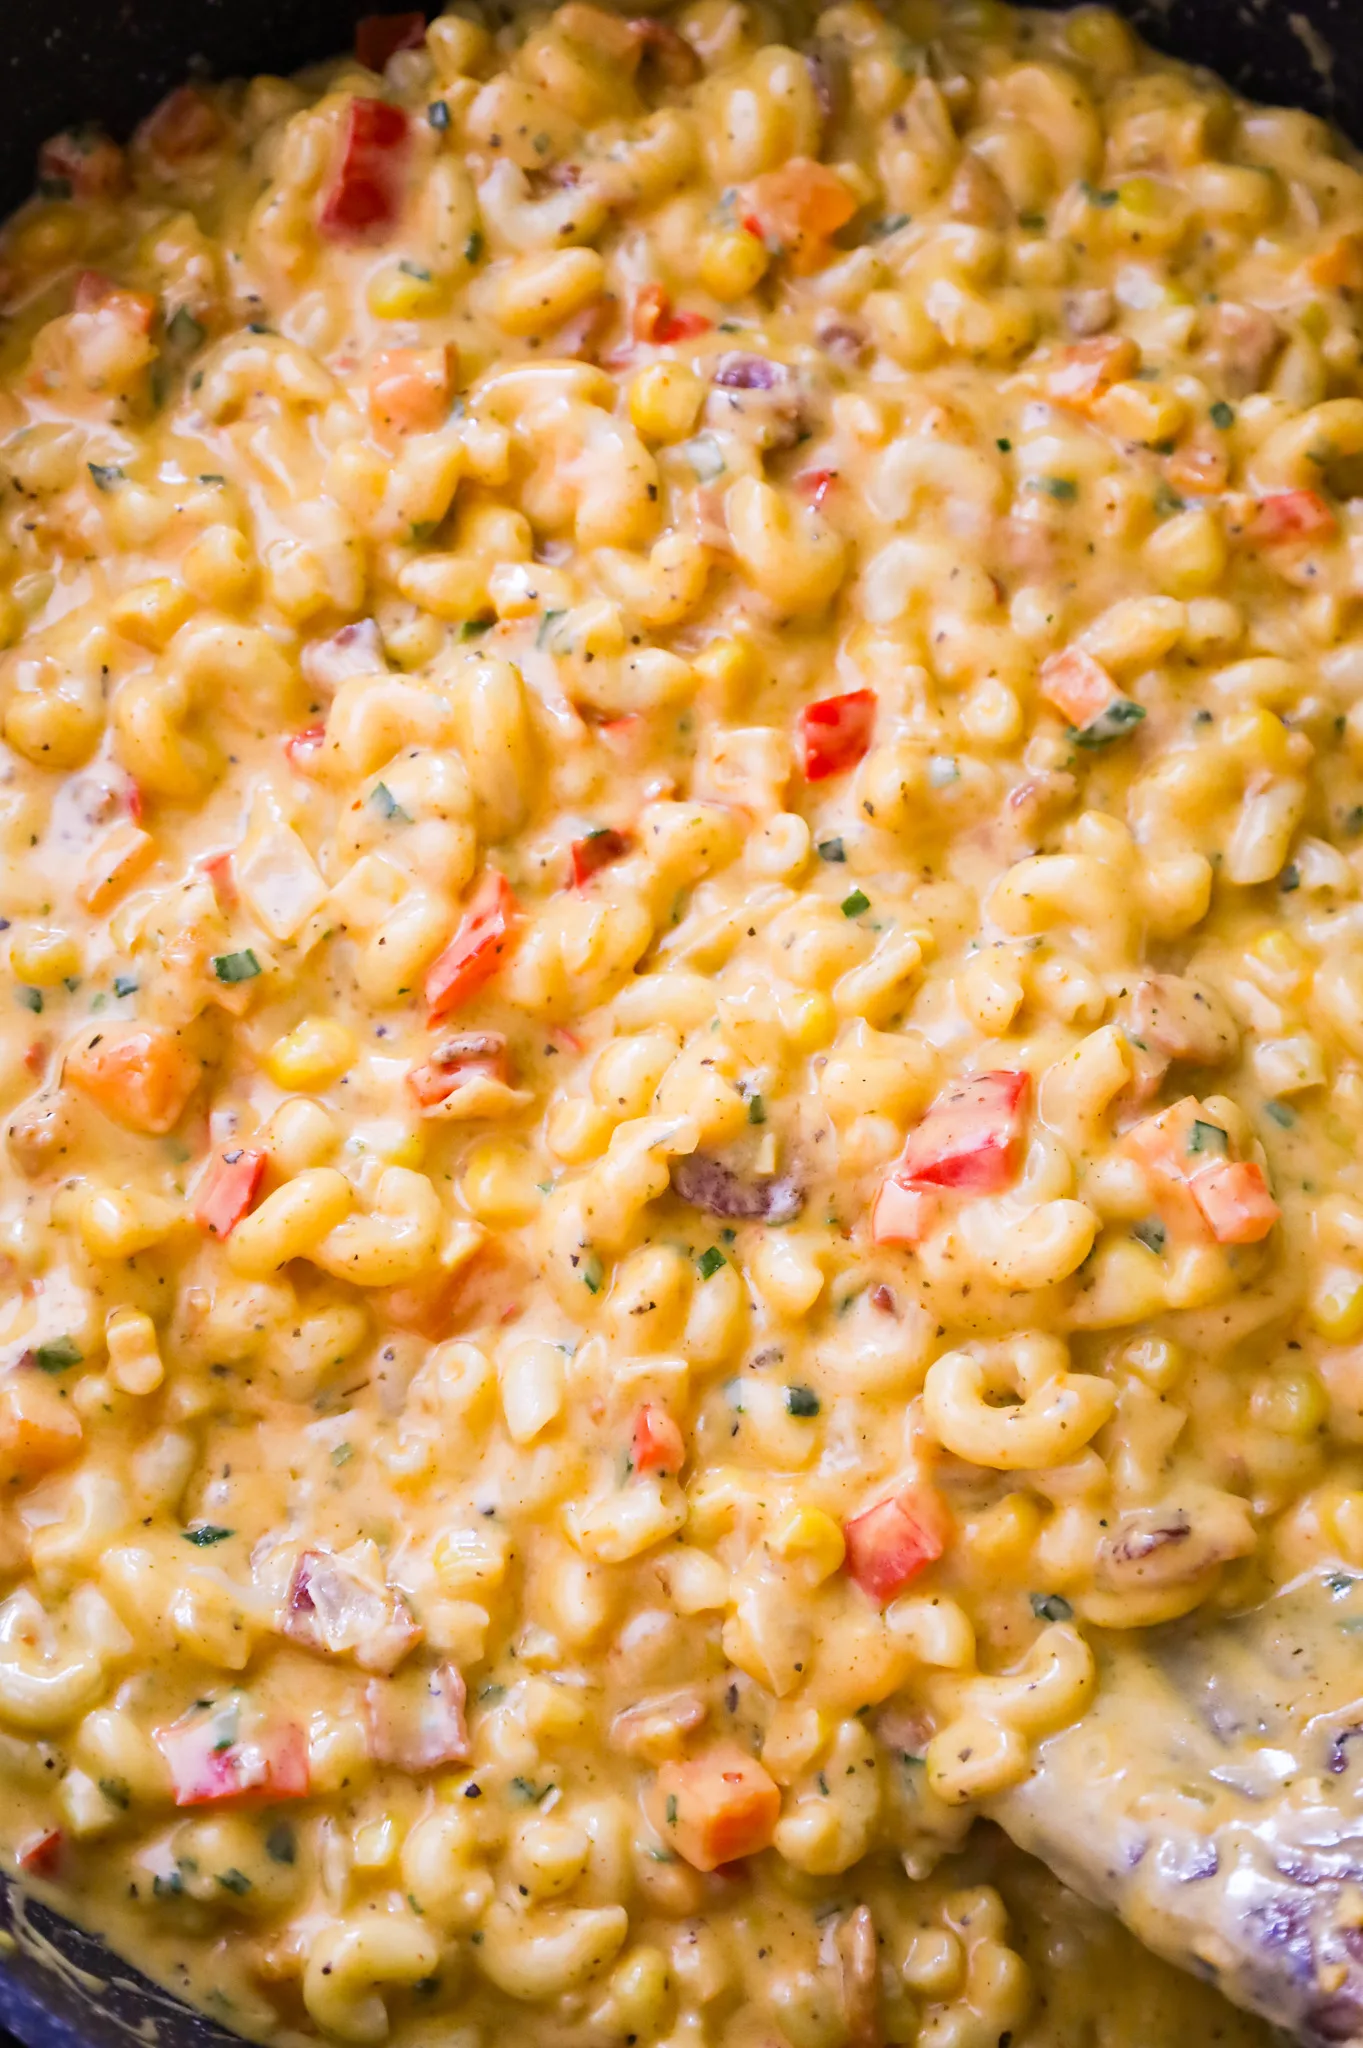 Cajun macaroni and cheese in a skillet